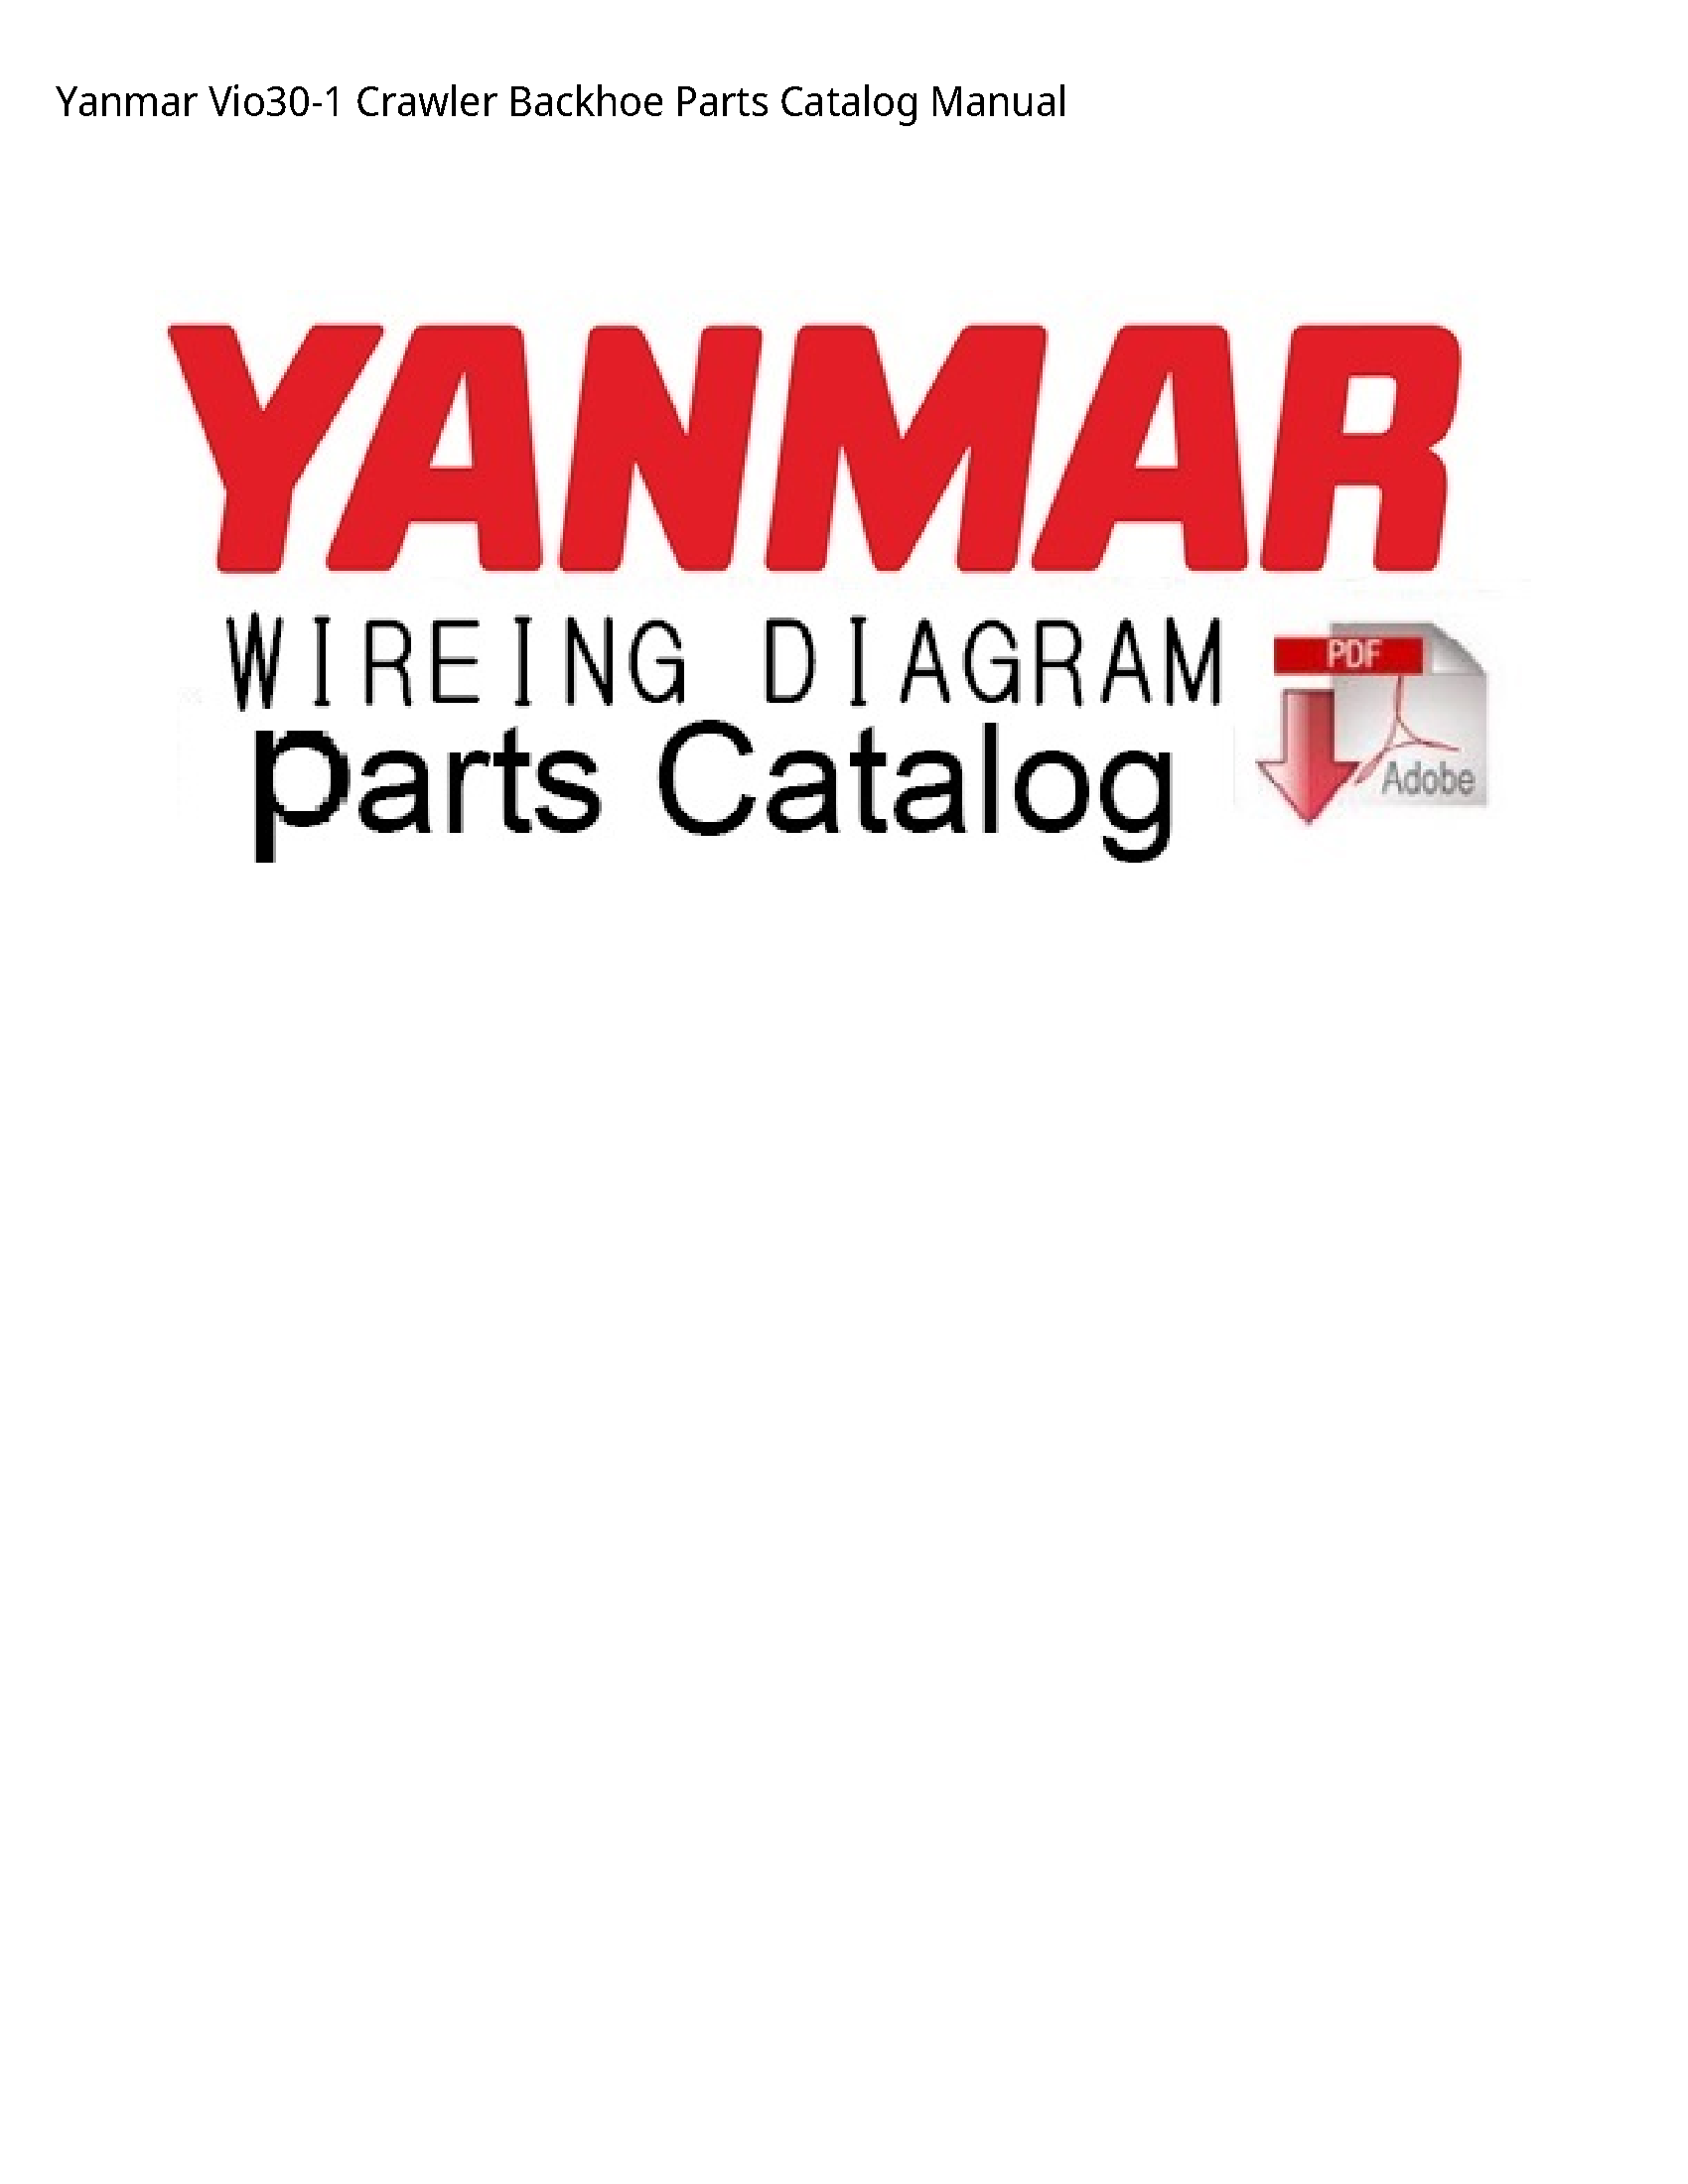 Yanmar Vio30-1 Crawler Backhoe Parts Catalog manual